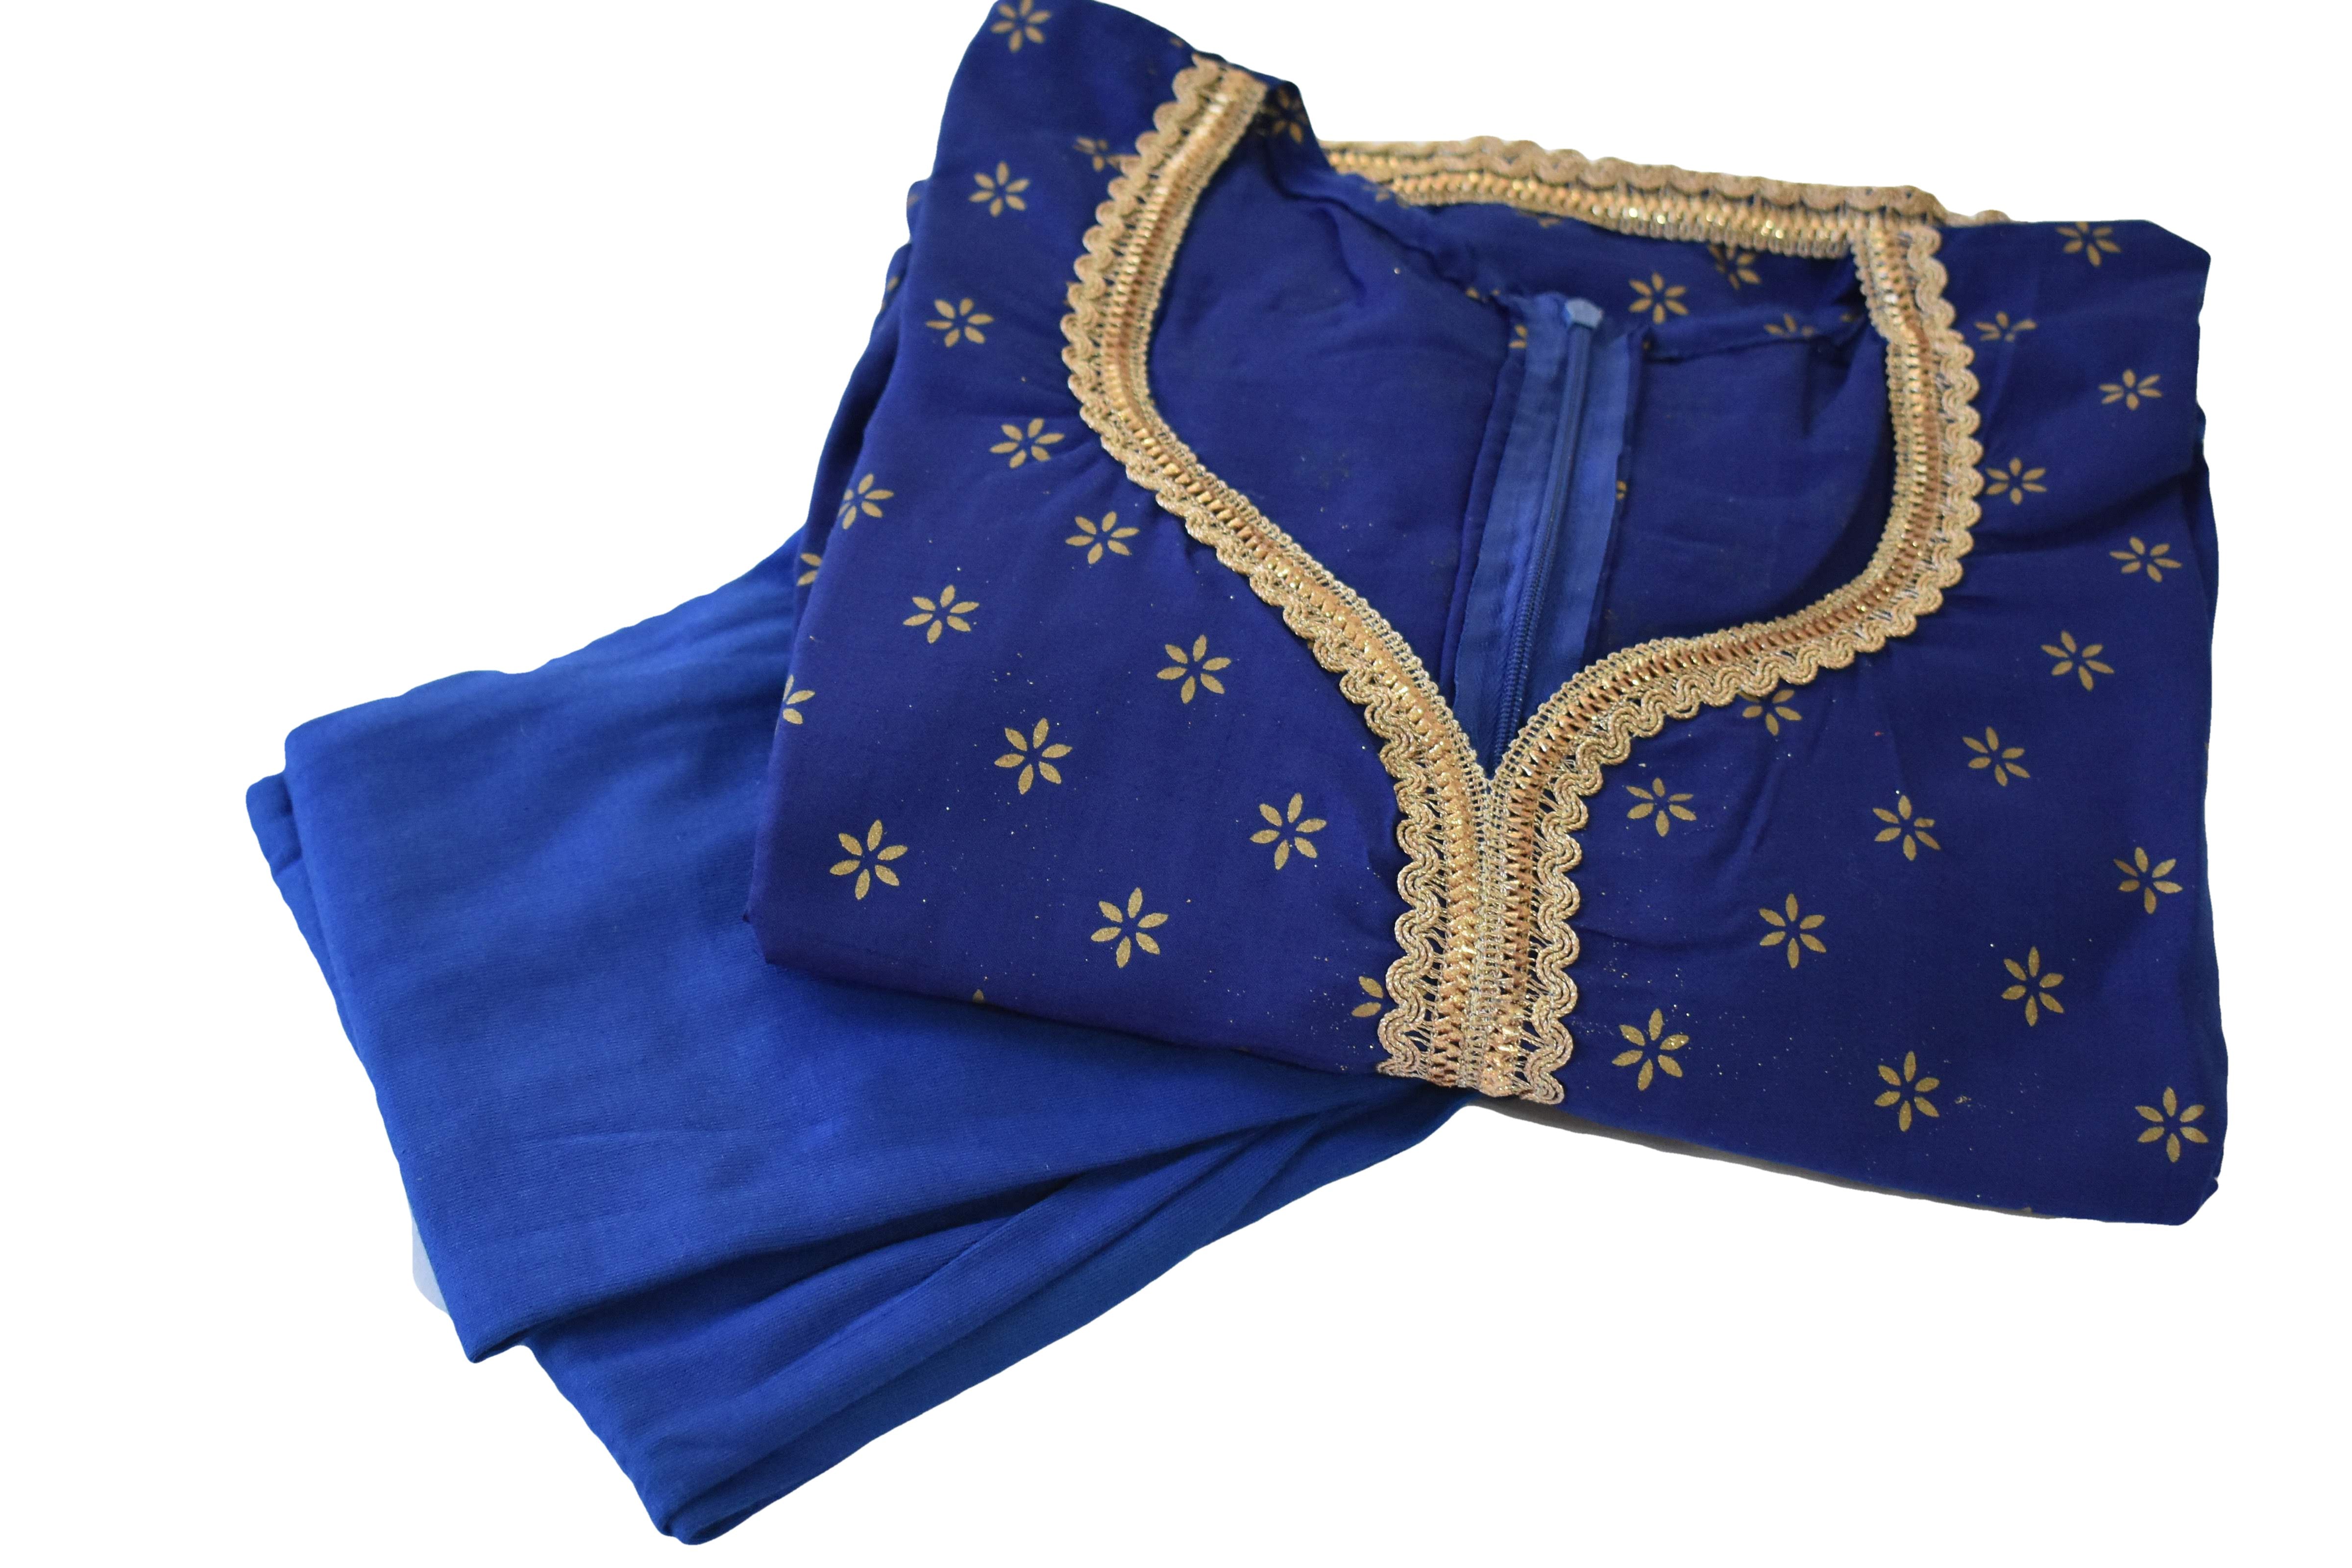 Royal Blue Color - Gold Block Emboss Print - Gold Zari Lace - Cotton Anarkali Kurti Kameez Set